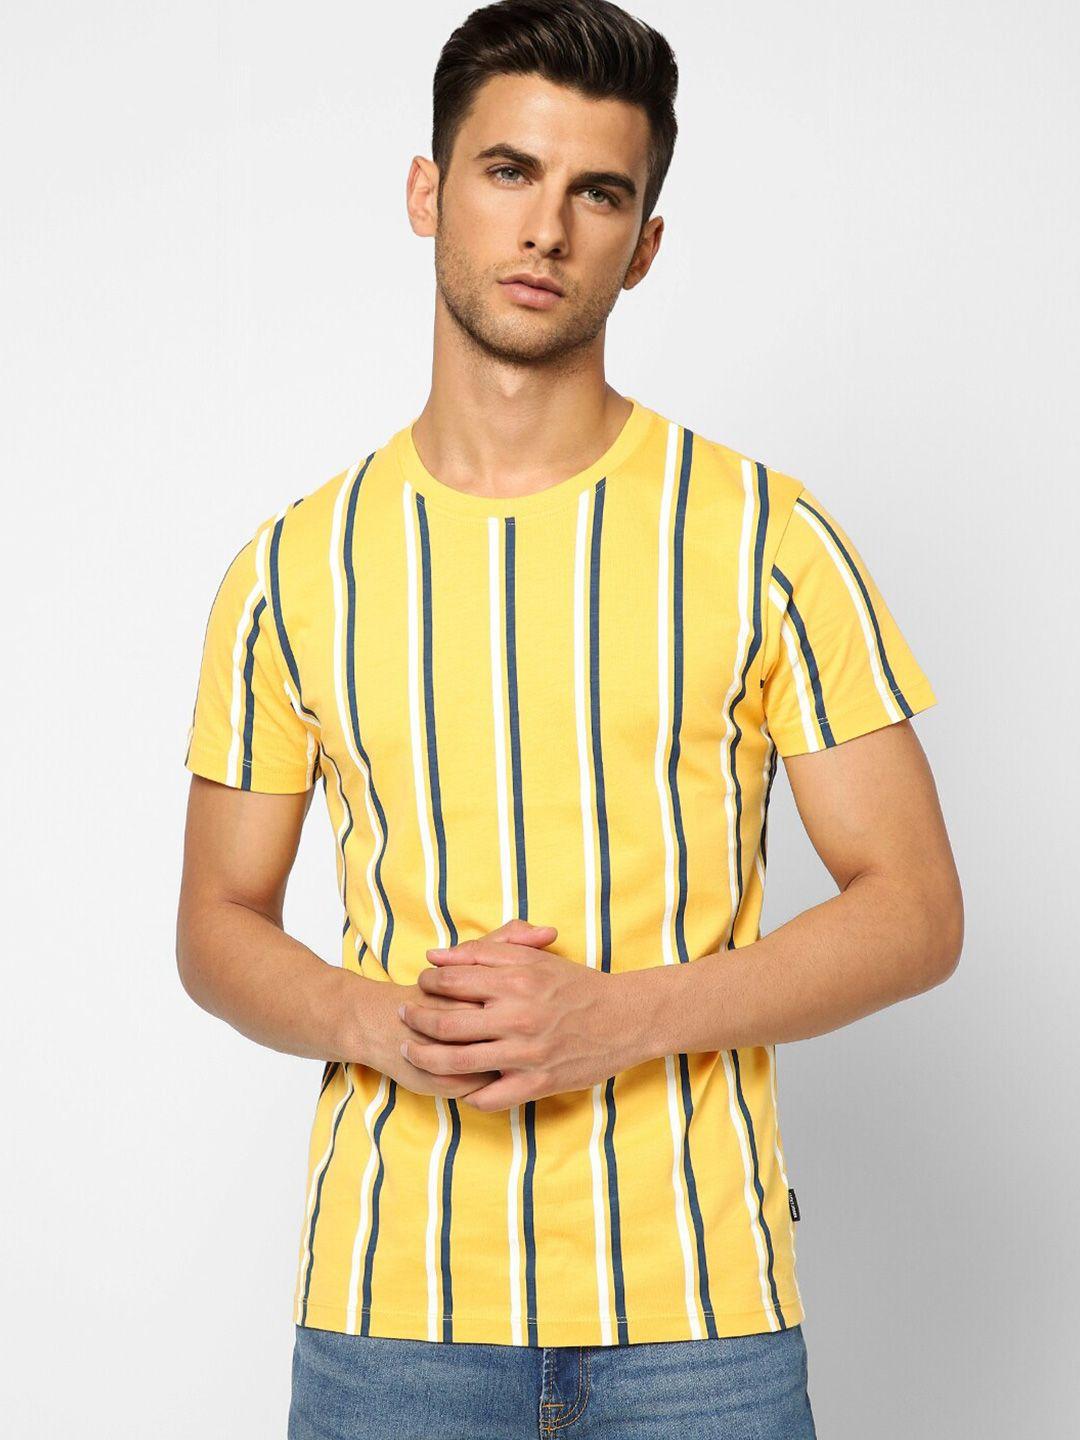 jack & jones men yellow striped cotton slim fit t-shirt